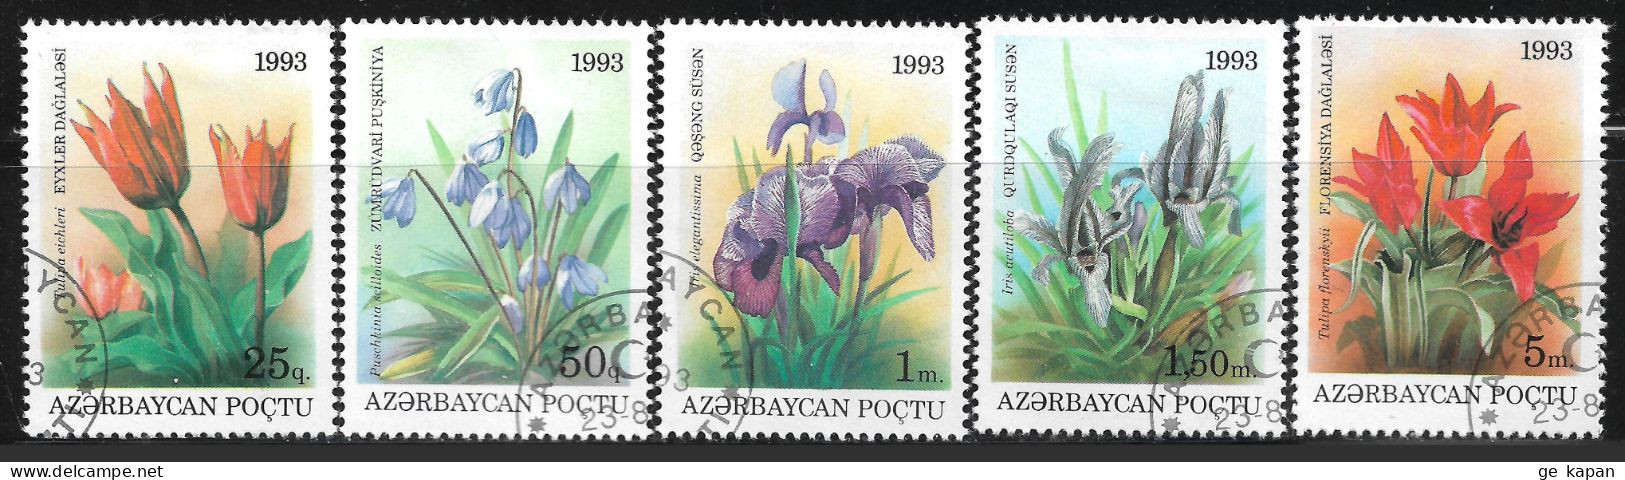 1993 AZERBAJAN Set Of 5 Used STAMPS (Michel # 91-95) - Azerbaijan